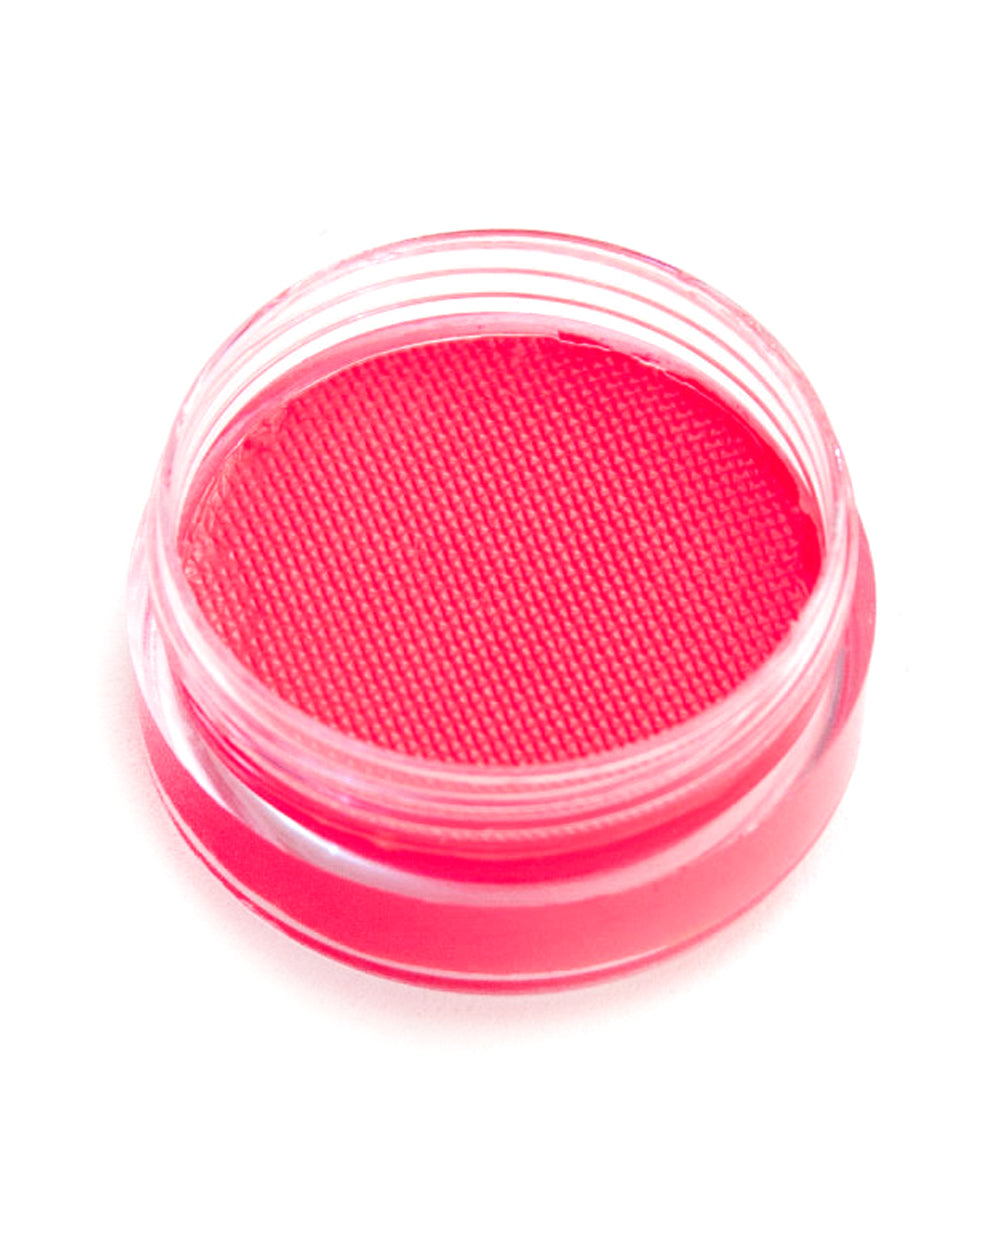 Dollface - Pink Paint Pod - Lunautics Liquid Liner